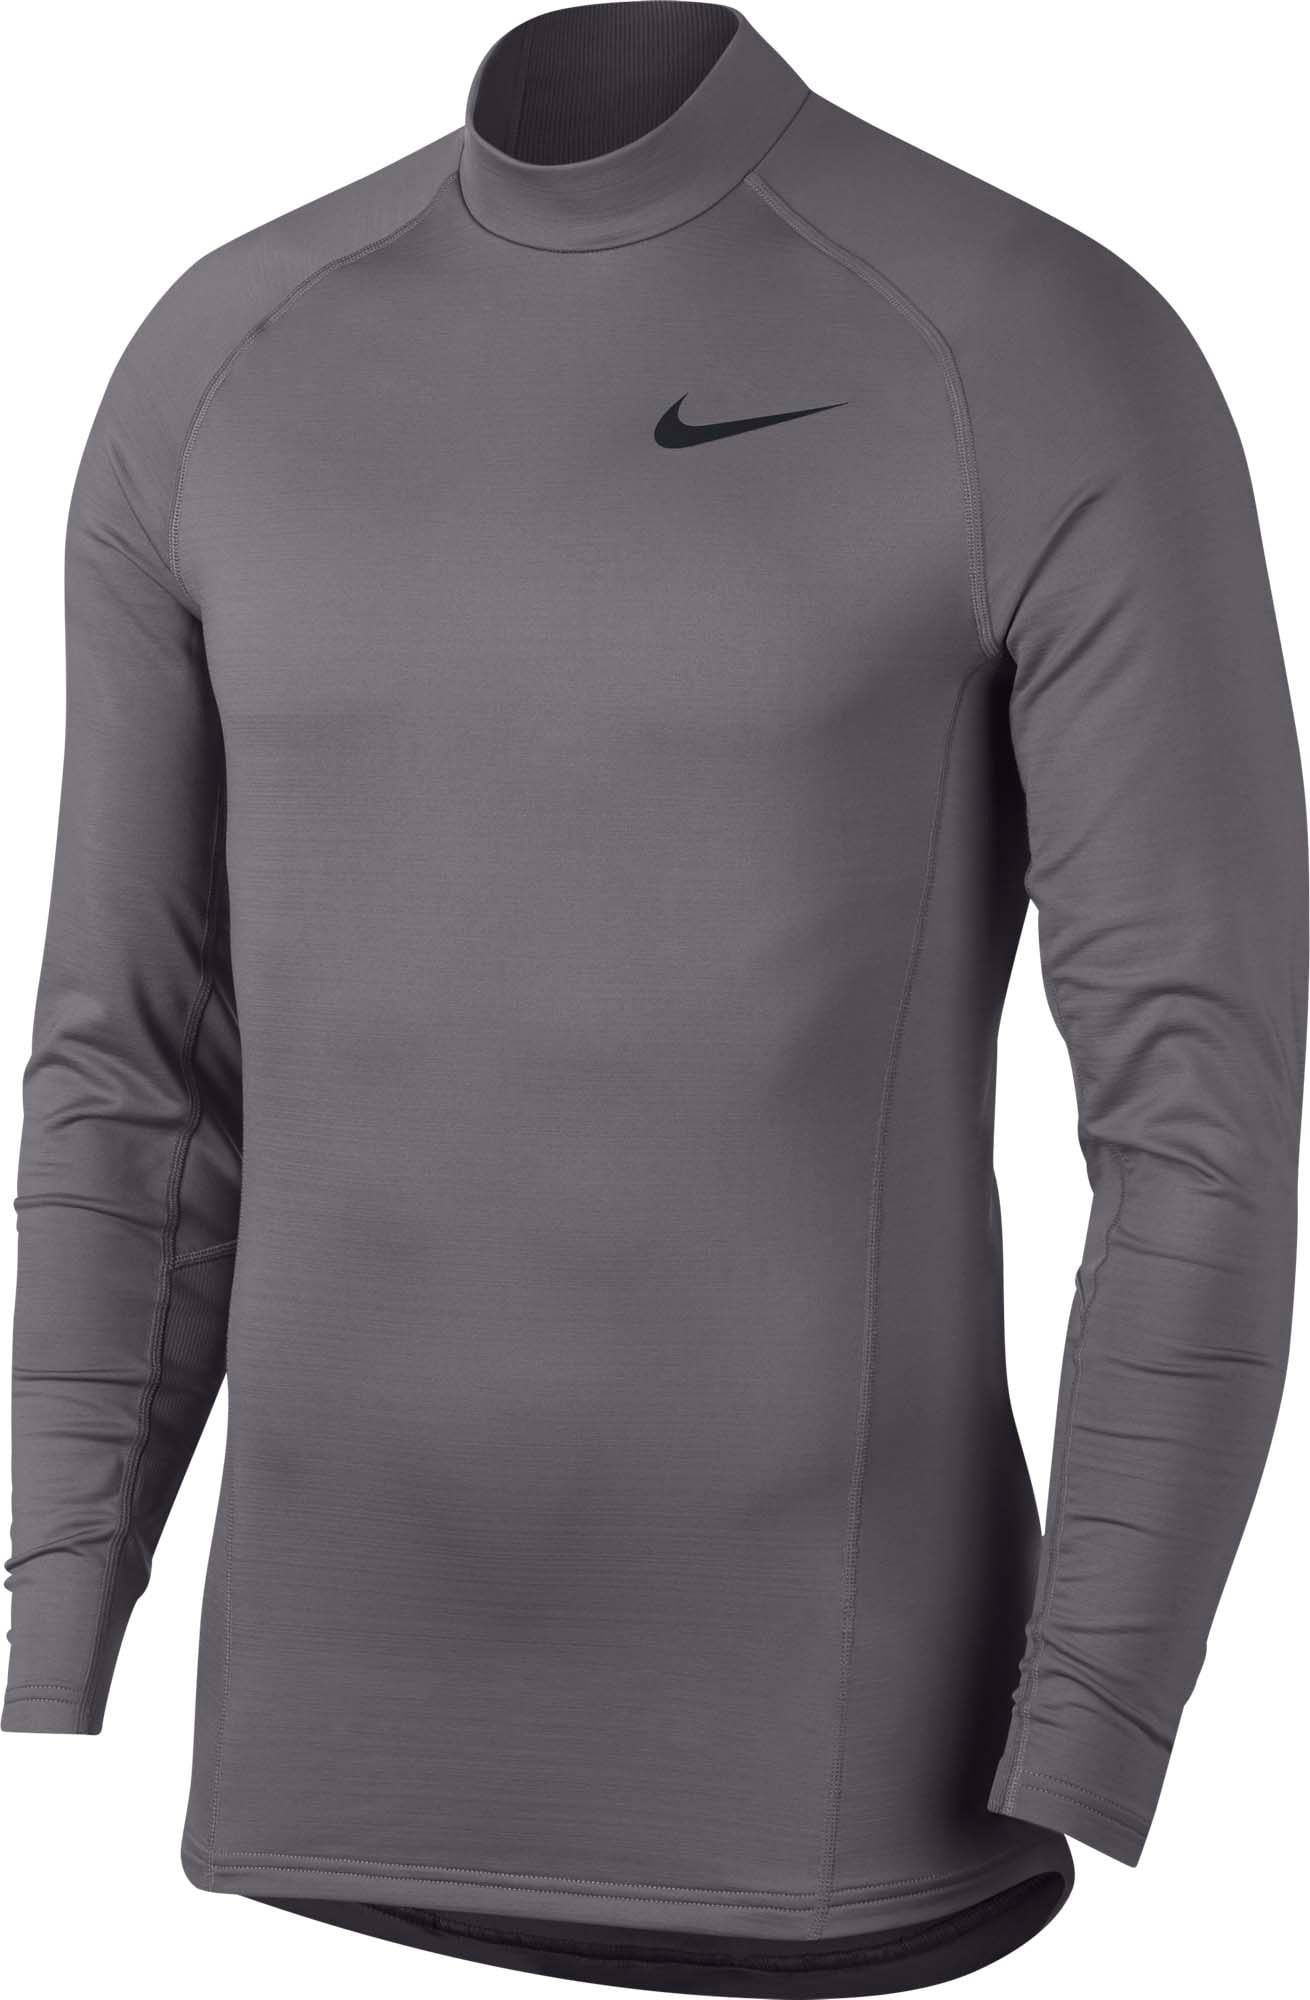 Nike - Nike Men's Therma Long Sleeve Shirt - Walmart.com - Walmart.com